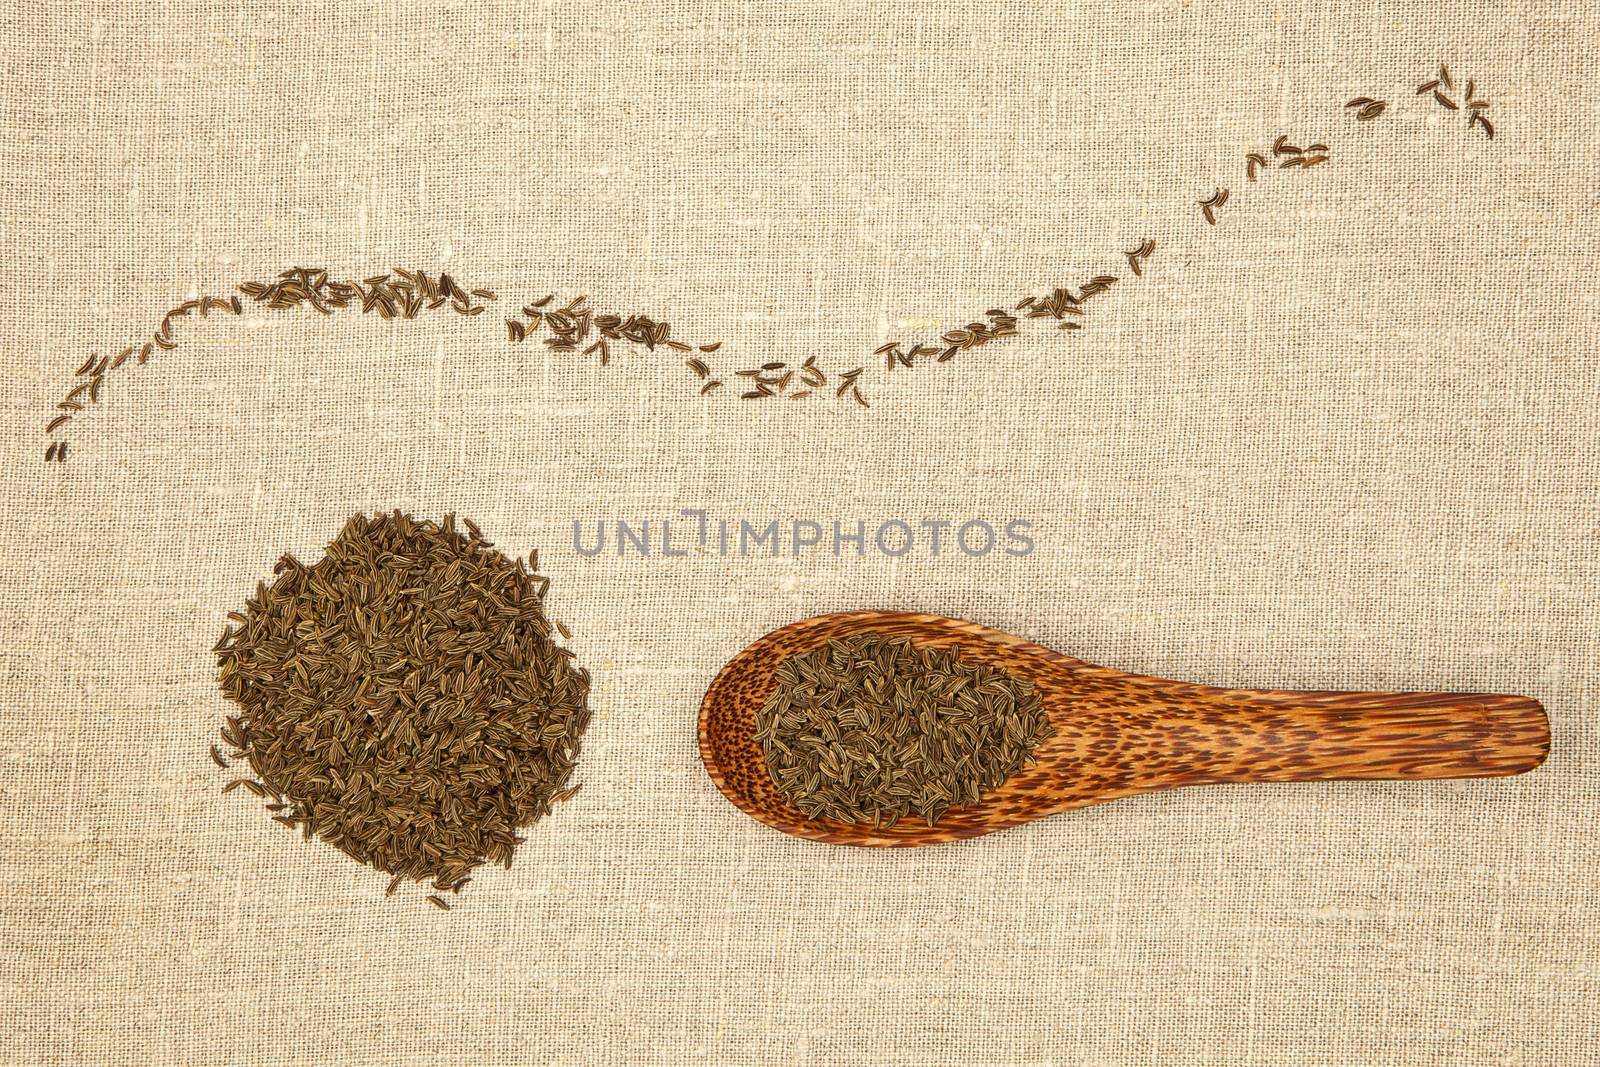 Cumin seeds decorative arranged on brown background.